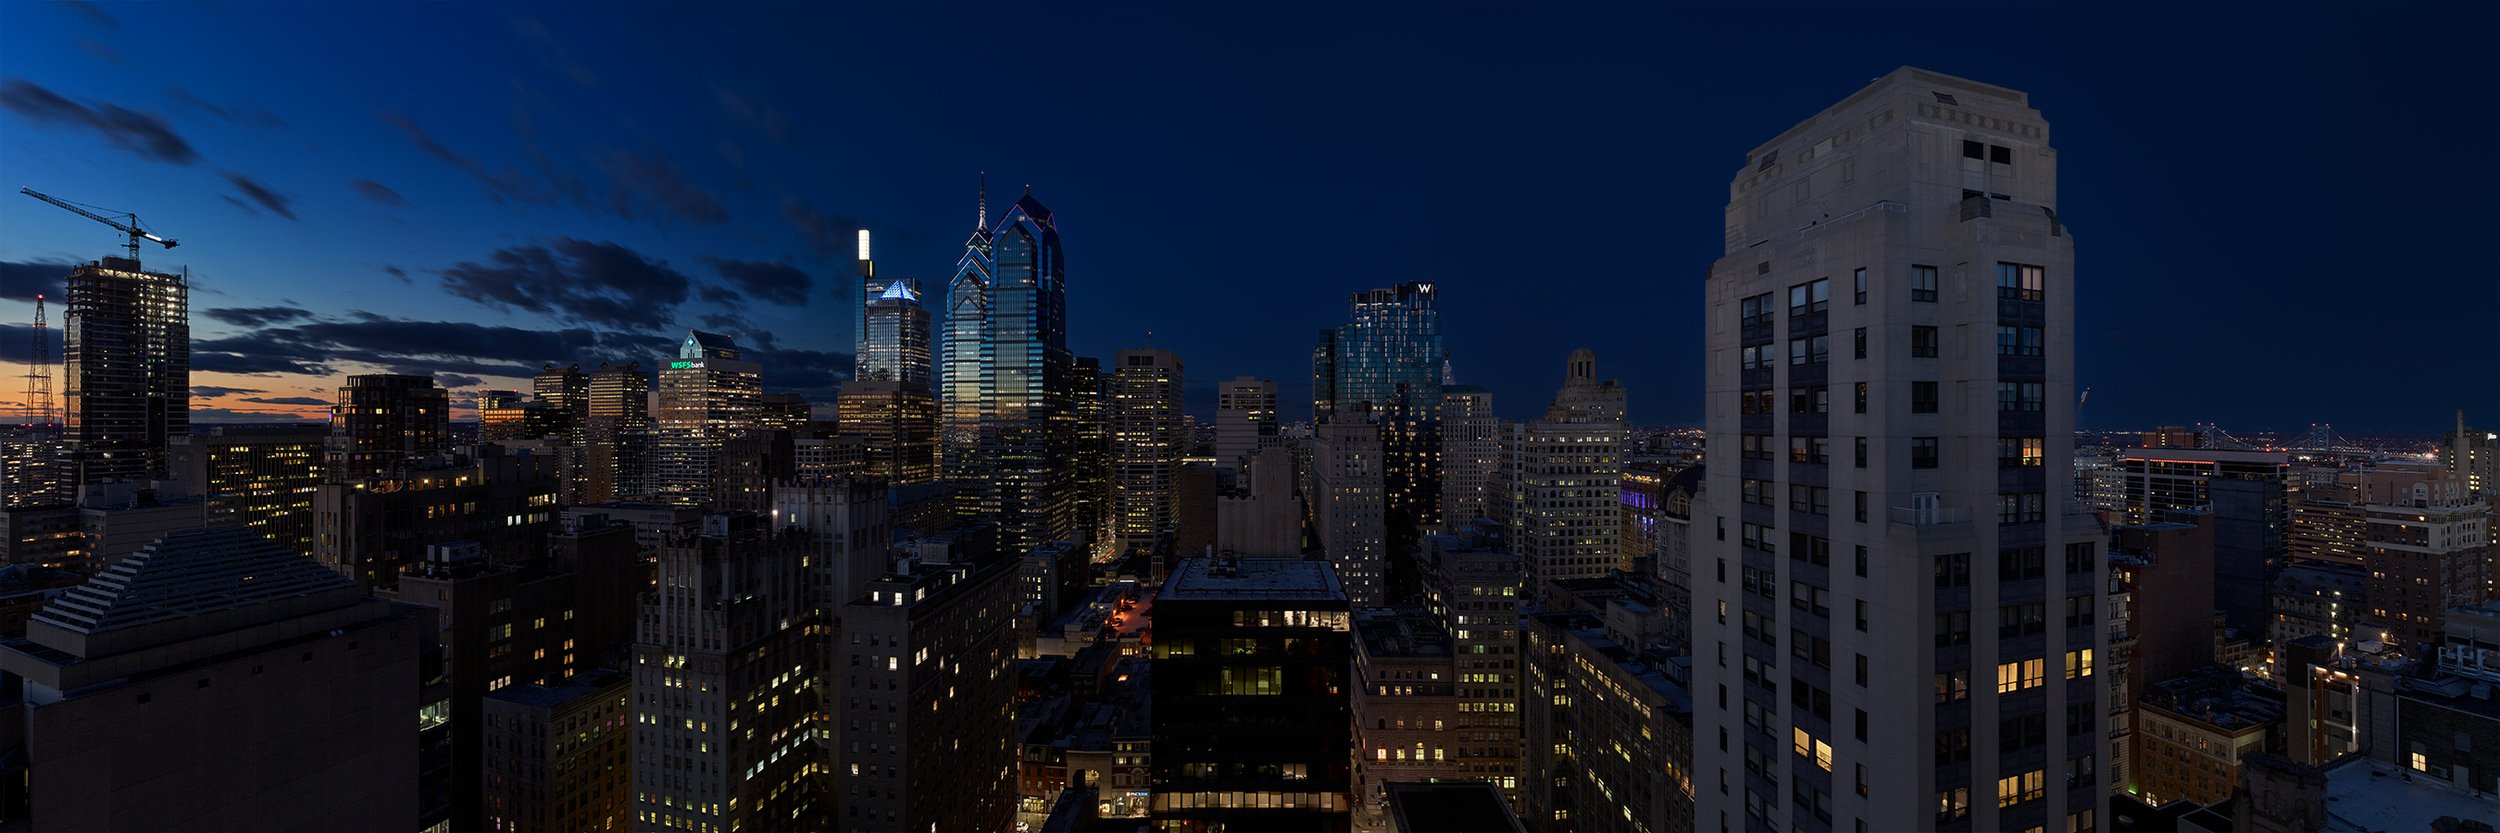 Philadelphia-2021-Center-City-View-Night.jpg